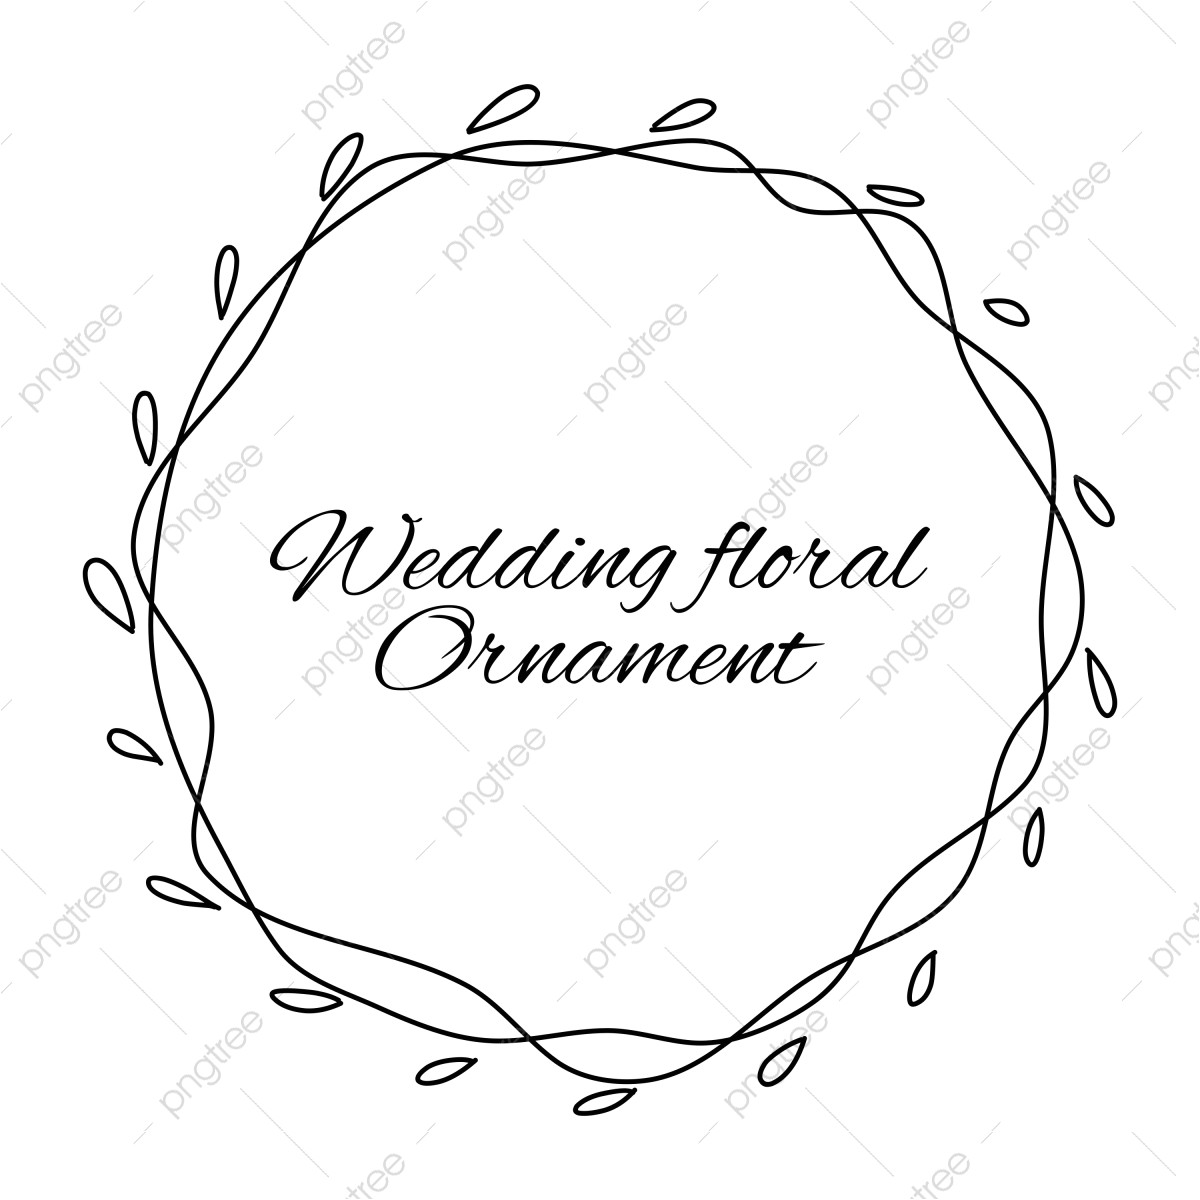 pngtree isolated frame ornament floral doodle hand drawn wedding invitation vector illustration png image 5044304 jpg